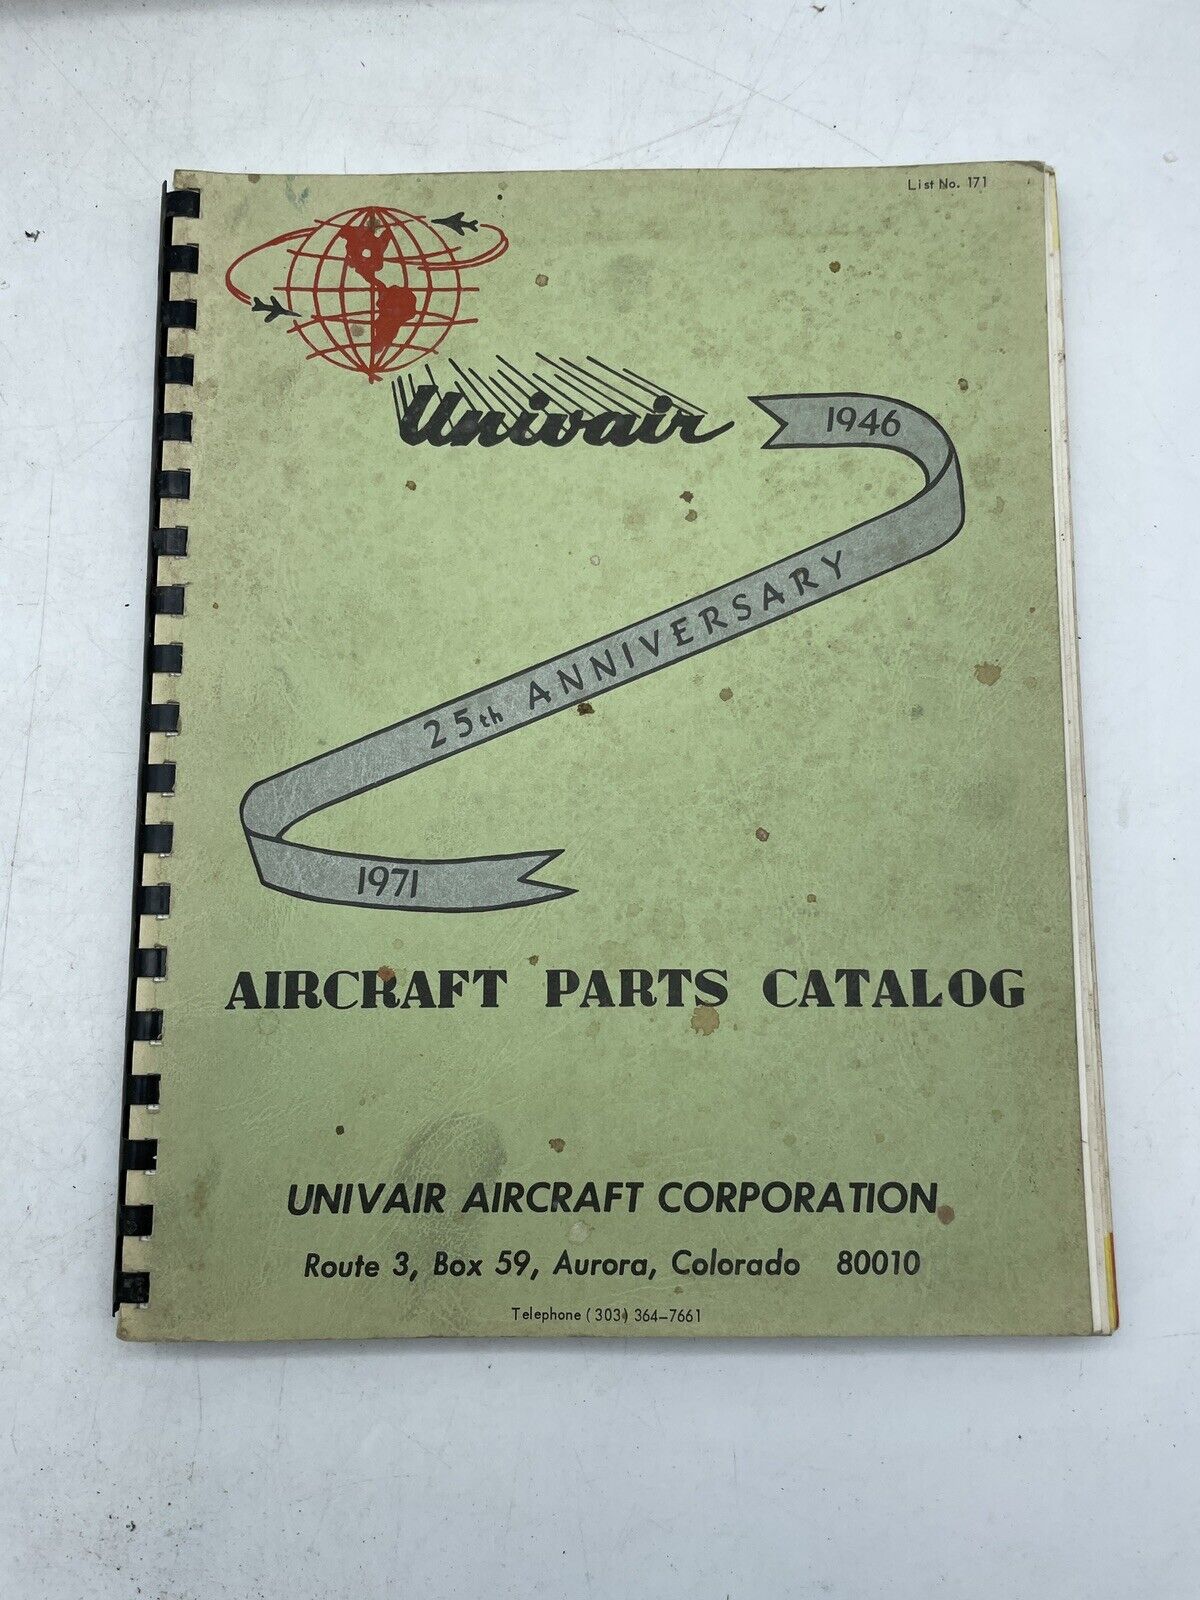 1971 UNIVAIR AIRCRAFT PARTS CATALOG DEALERS PRICE SALES MANUAL 25th Anniversary